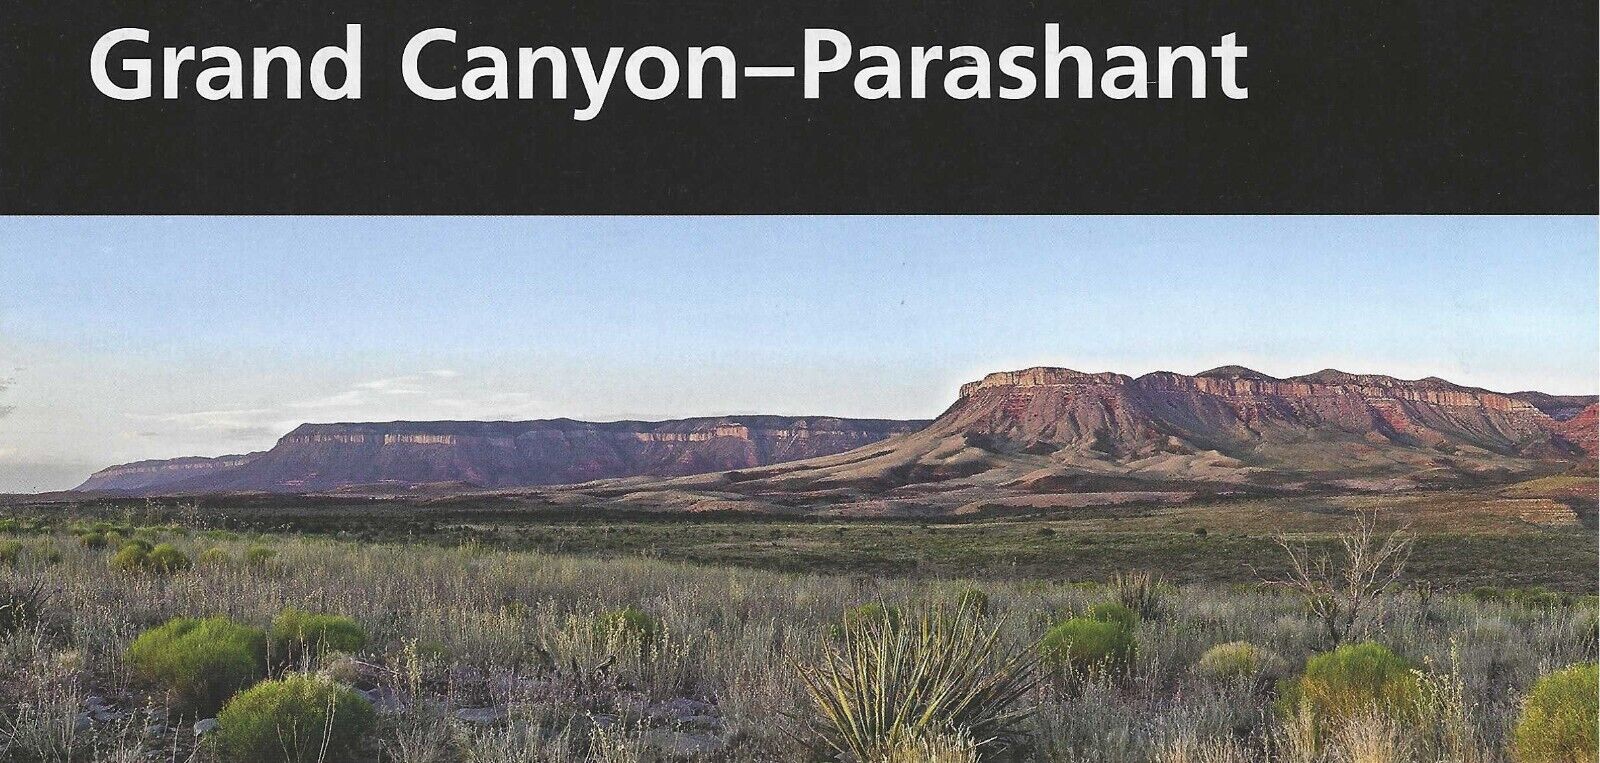 Grand Canyon-Parashant National Monument Unigrid Brochure (2017 Version)